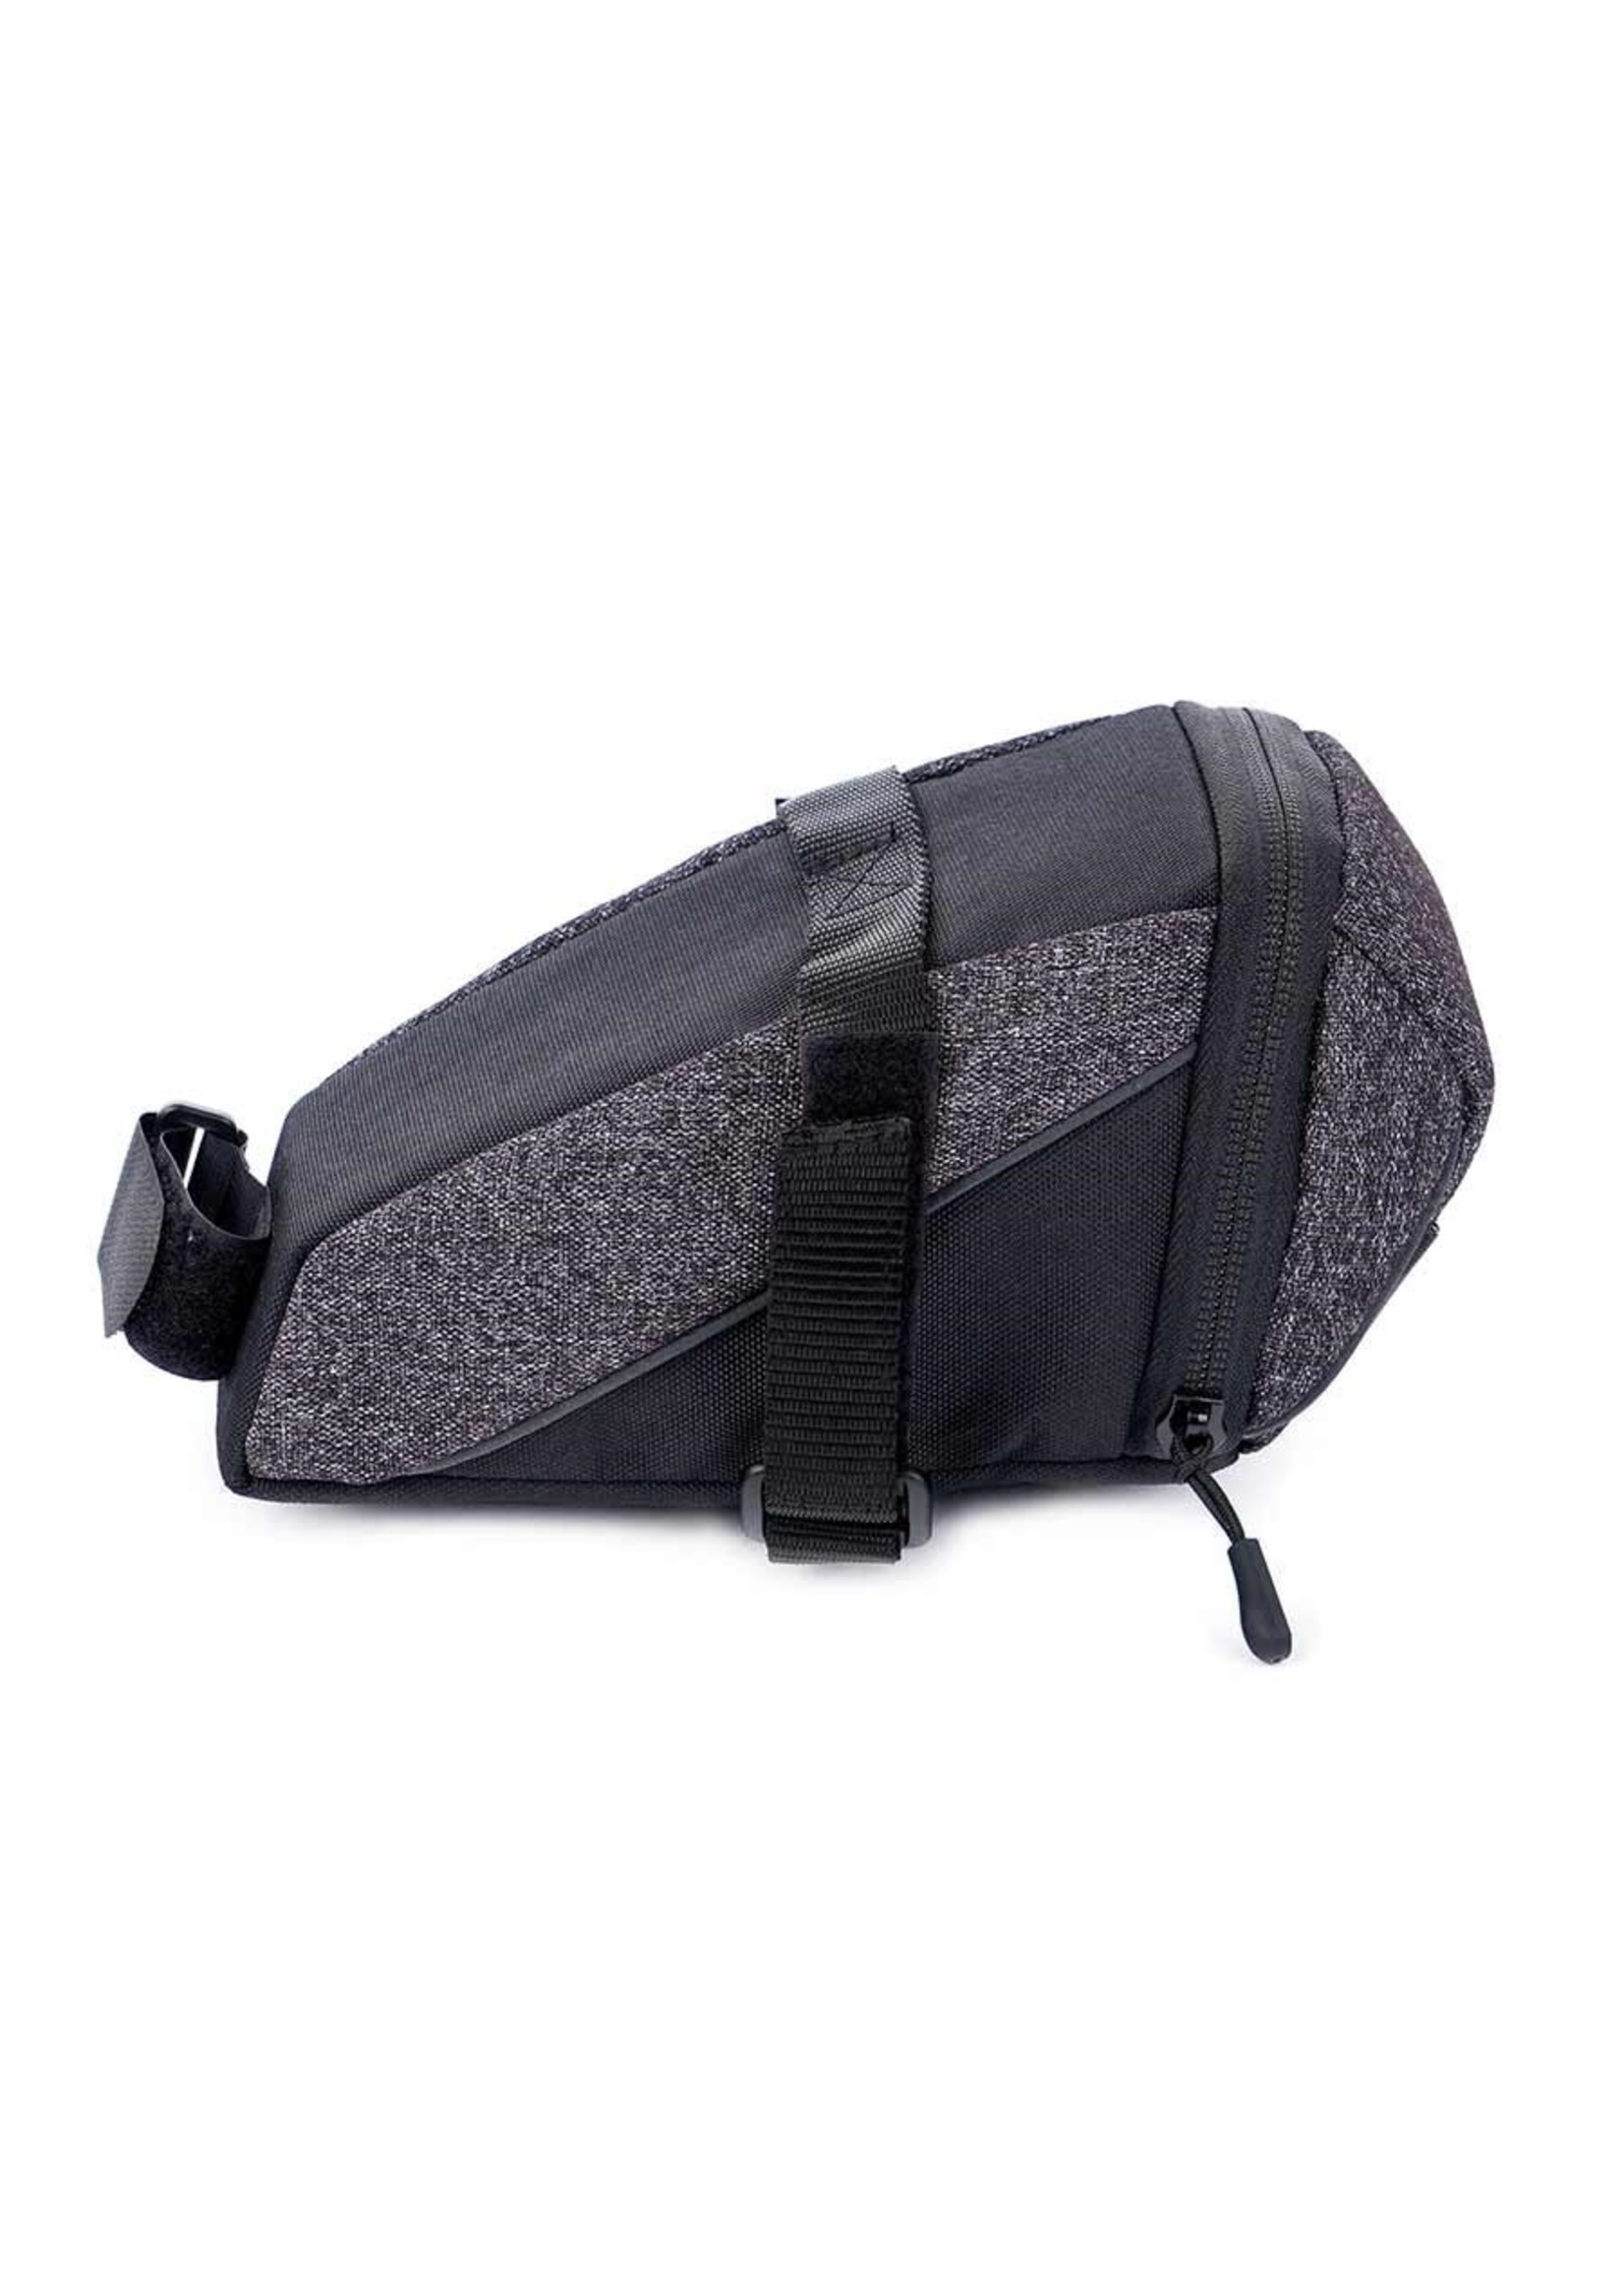 EVO EVO, Seat Bag, Large, Black